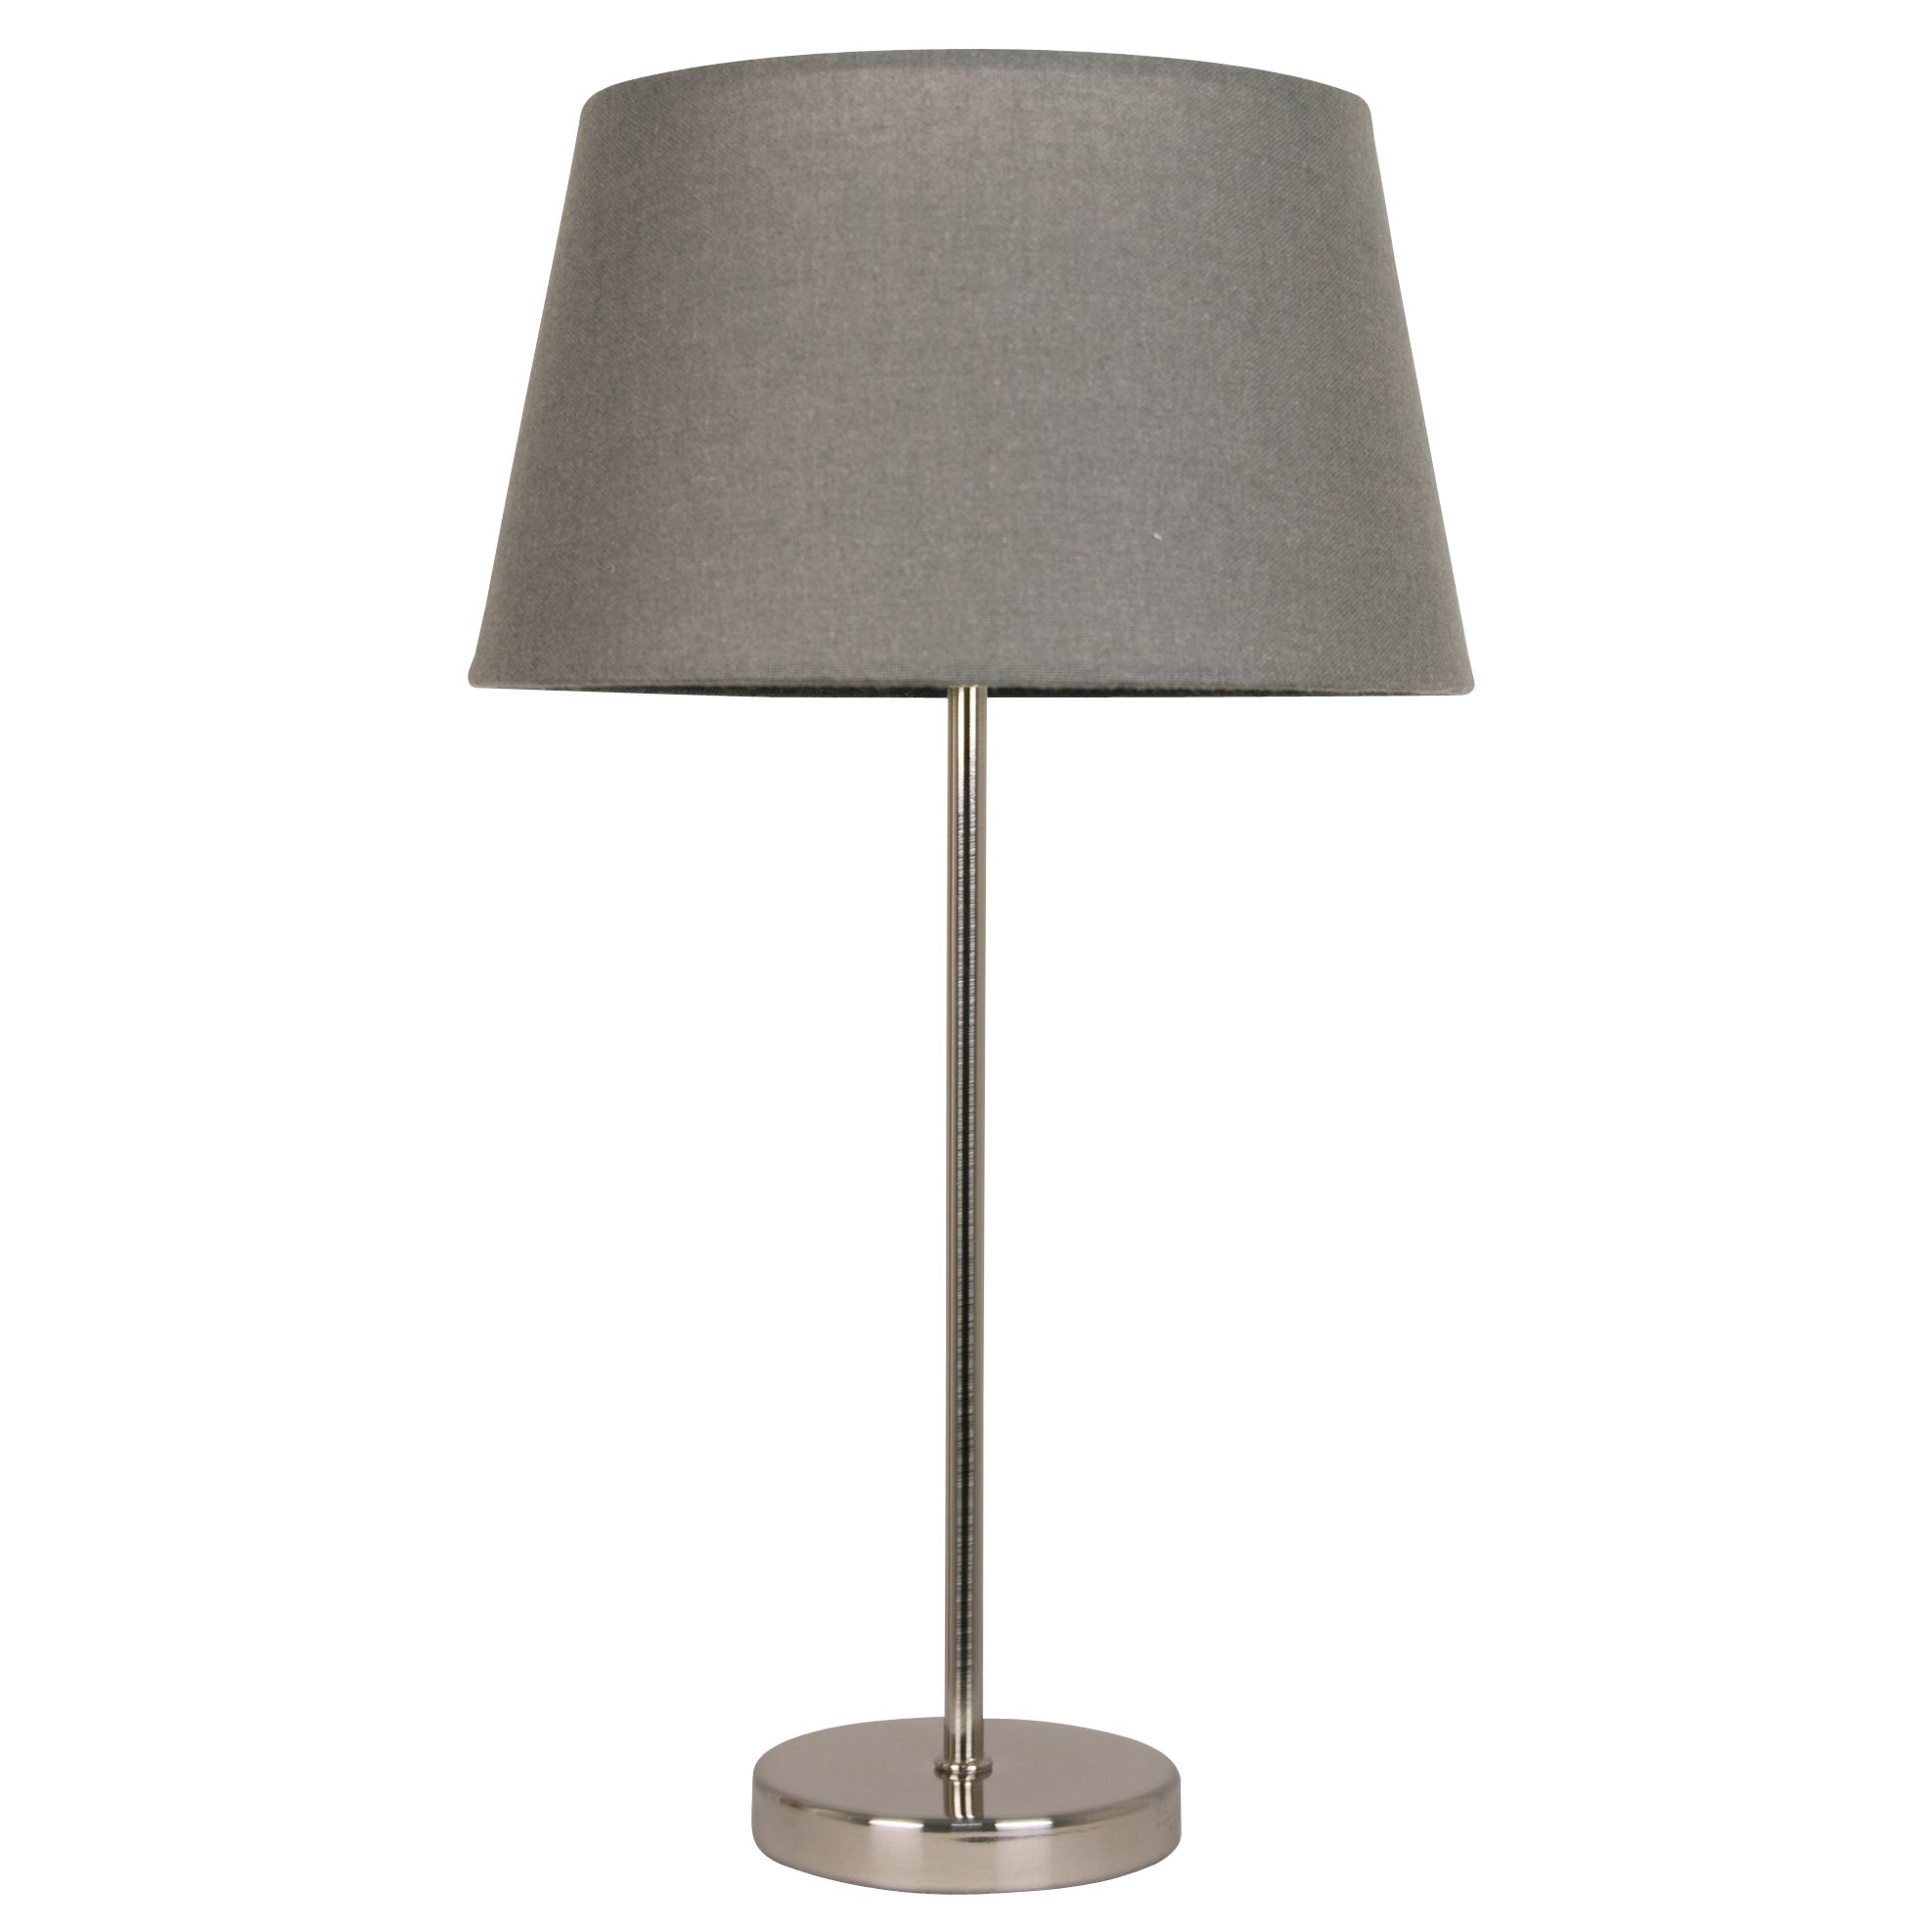 John Lewis Amy Table Lamp, Steel